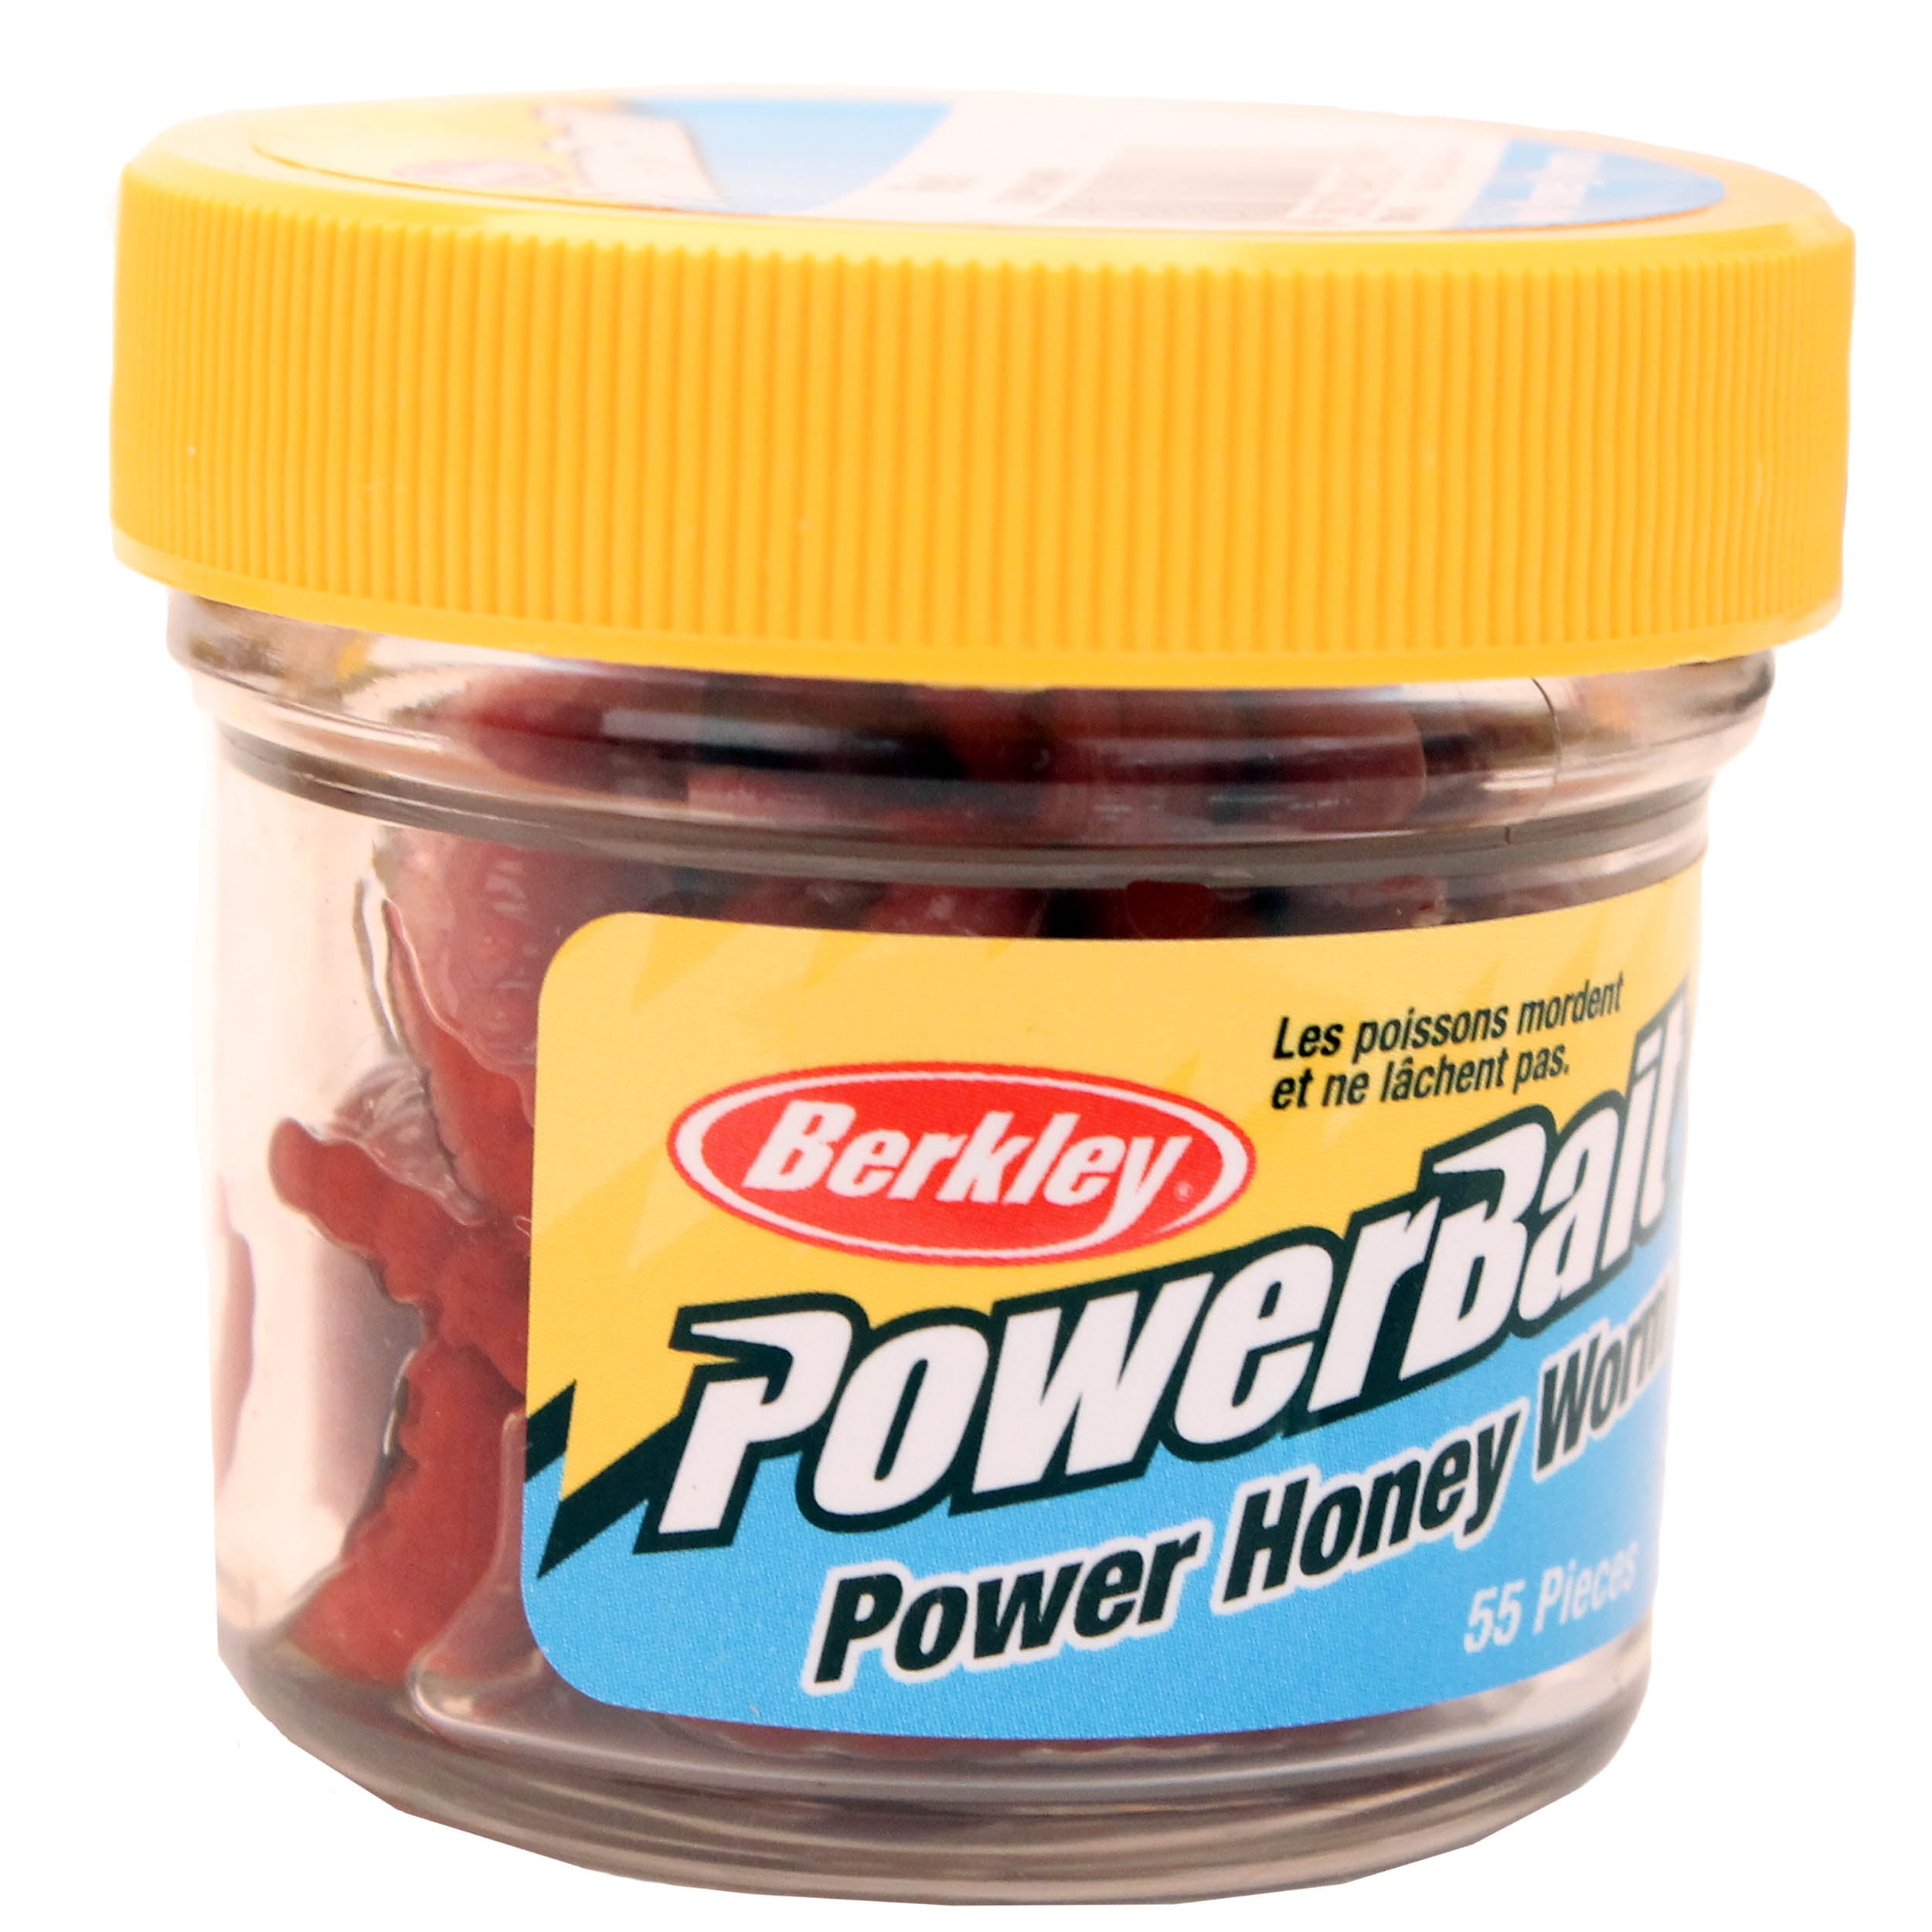 Berkley PowerBait Power Honey Worms, Red - 55 count